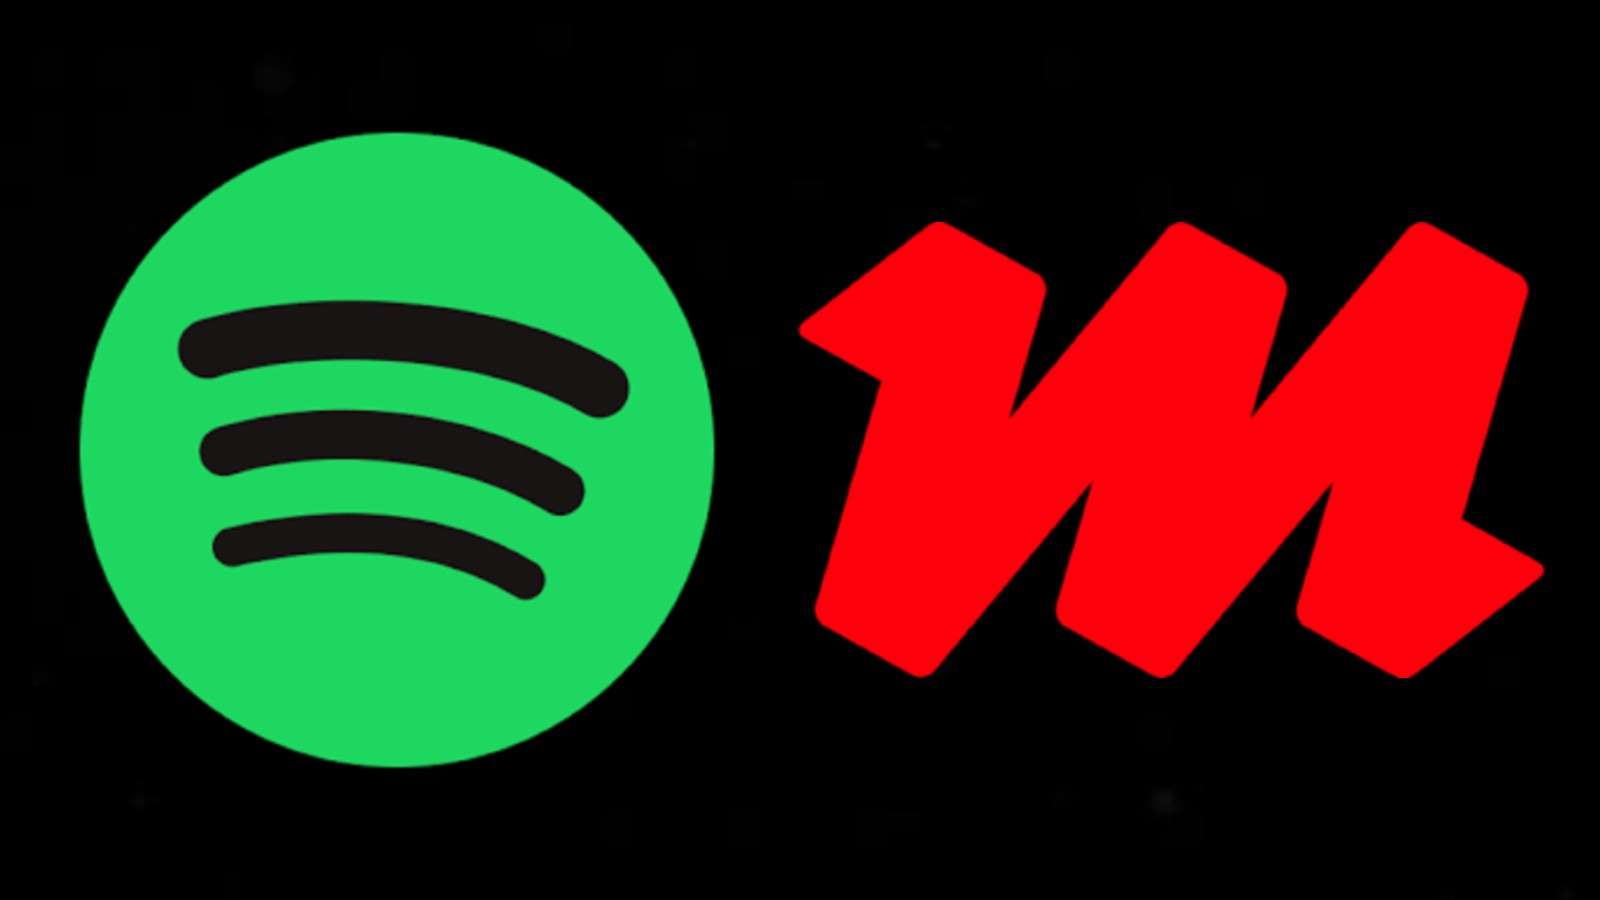 Spotify logo next to the Kakao M logo